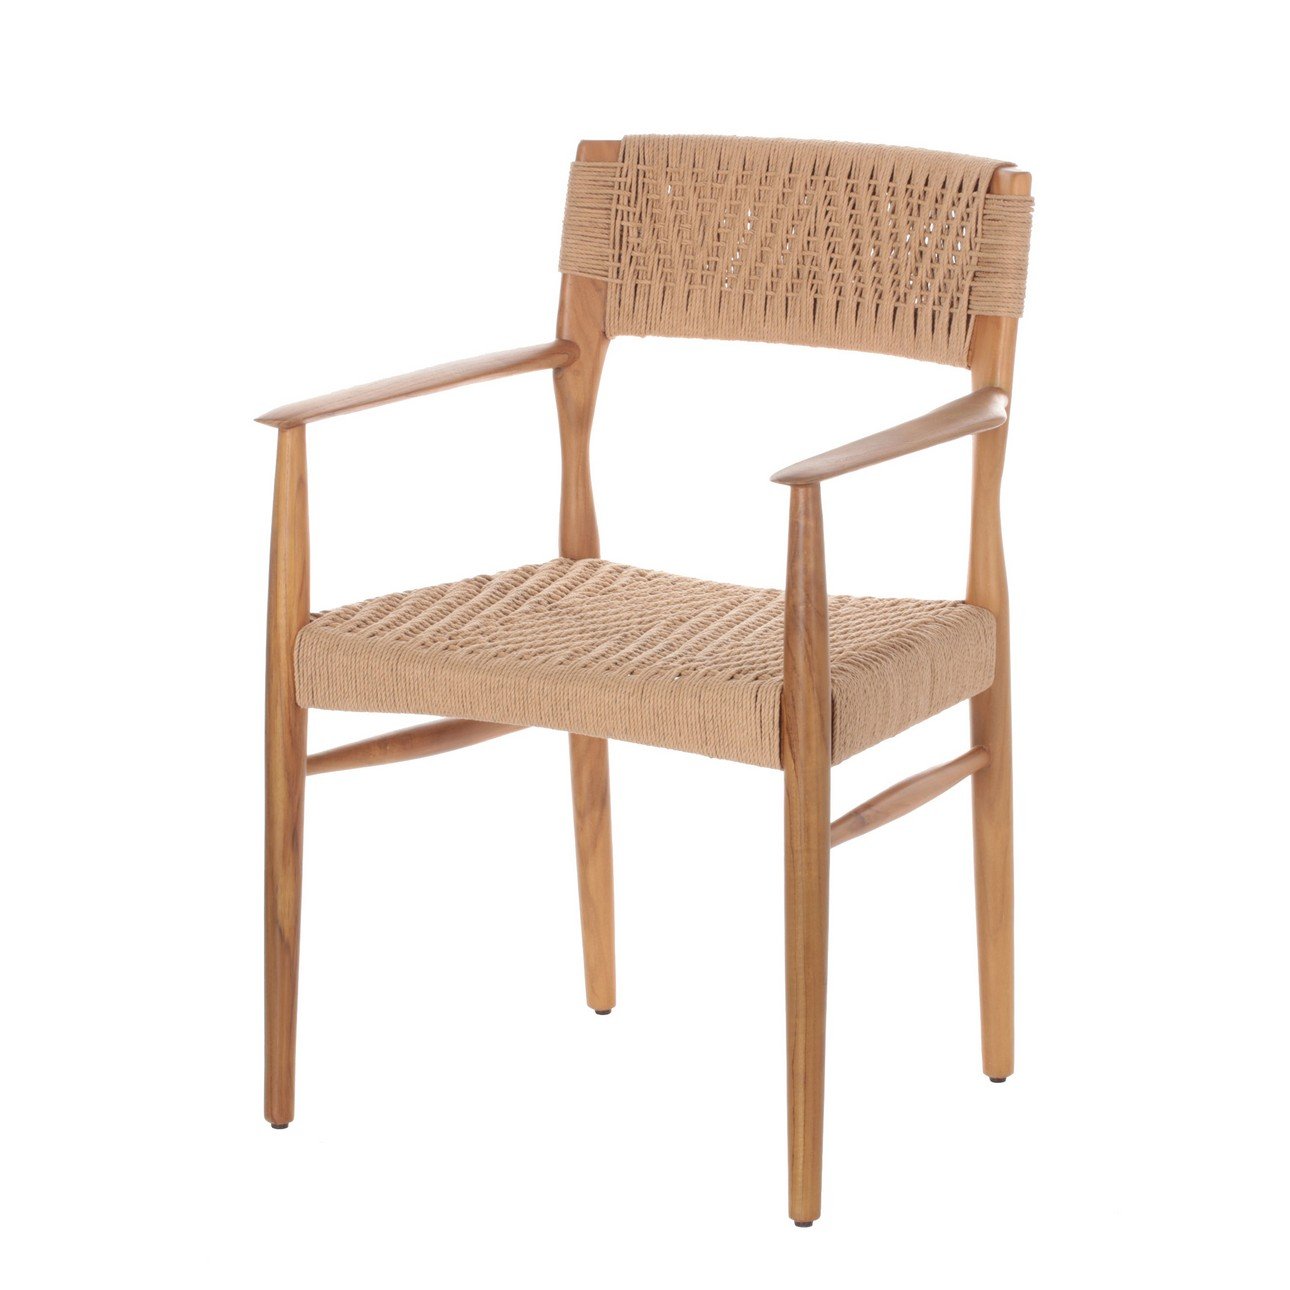 Židle Aife 57x47x81cm